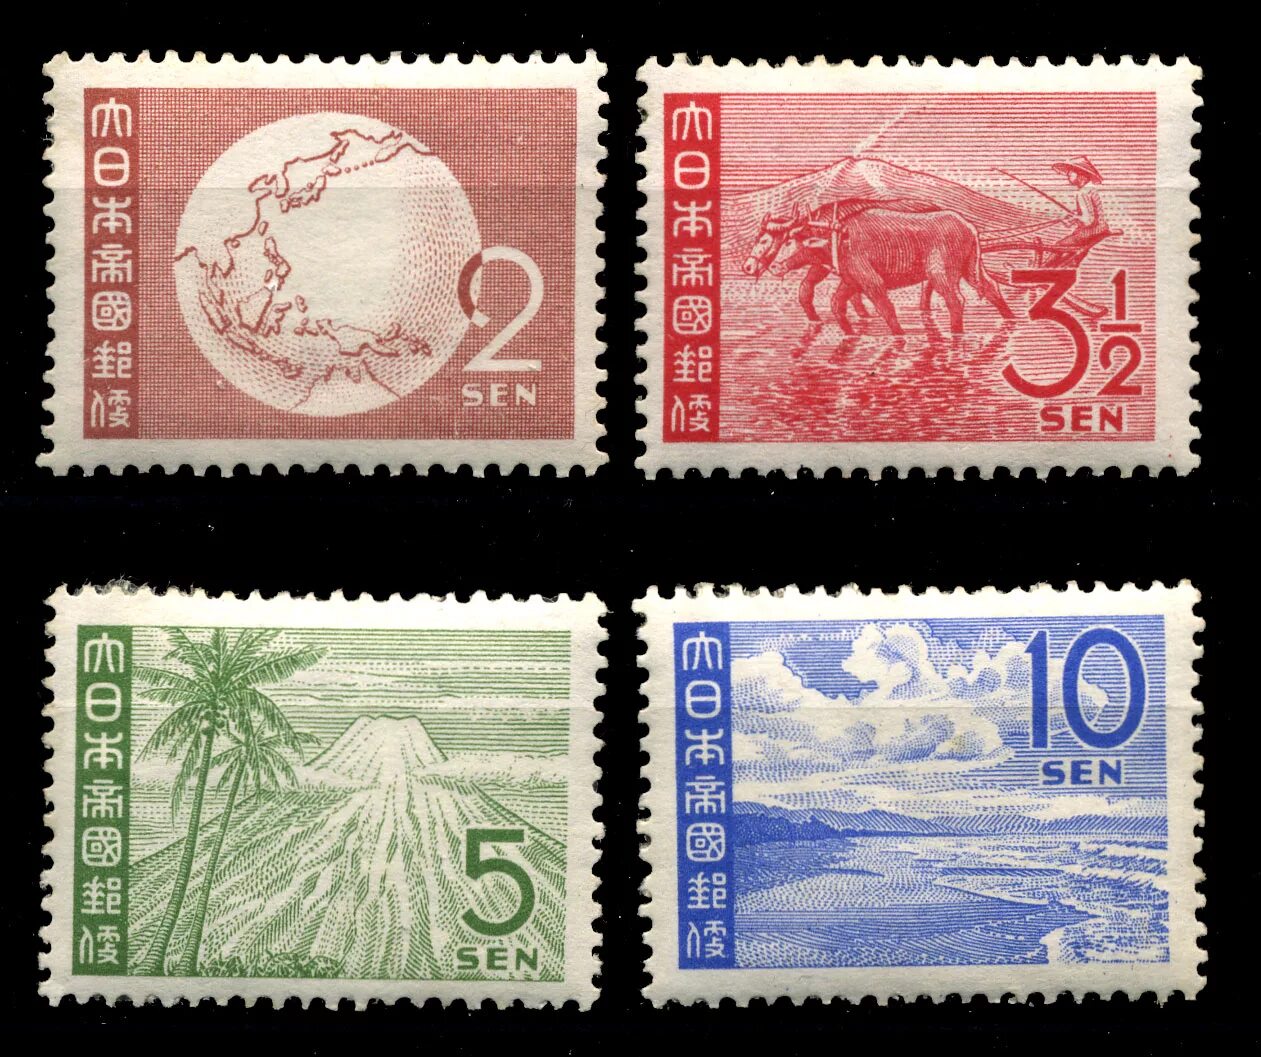 Country mark. Марки Nederland. Почтовая марка Nederland. Фауна на почтовых марках Нидерландов. Почтовые марки Нидерландов по годам.